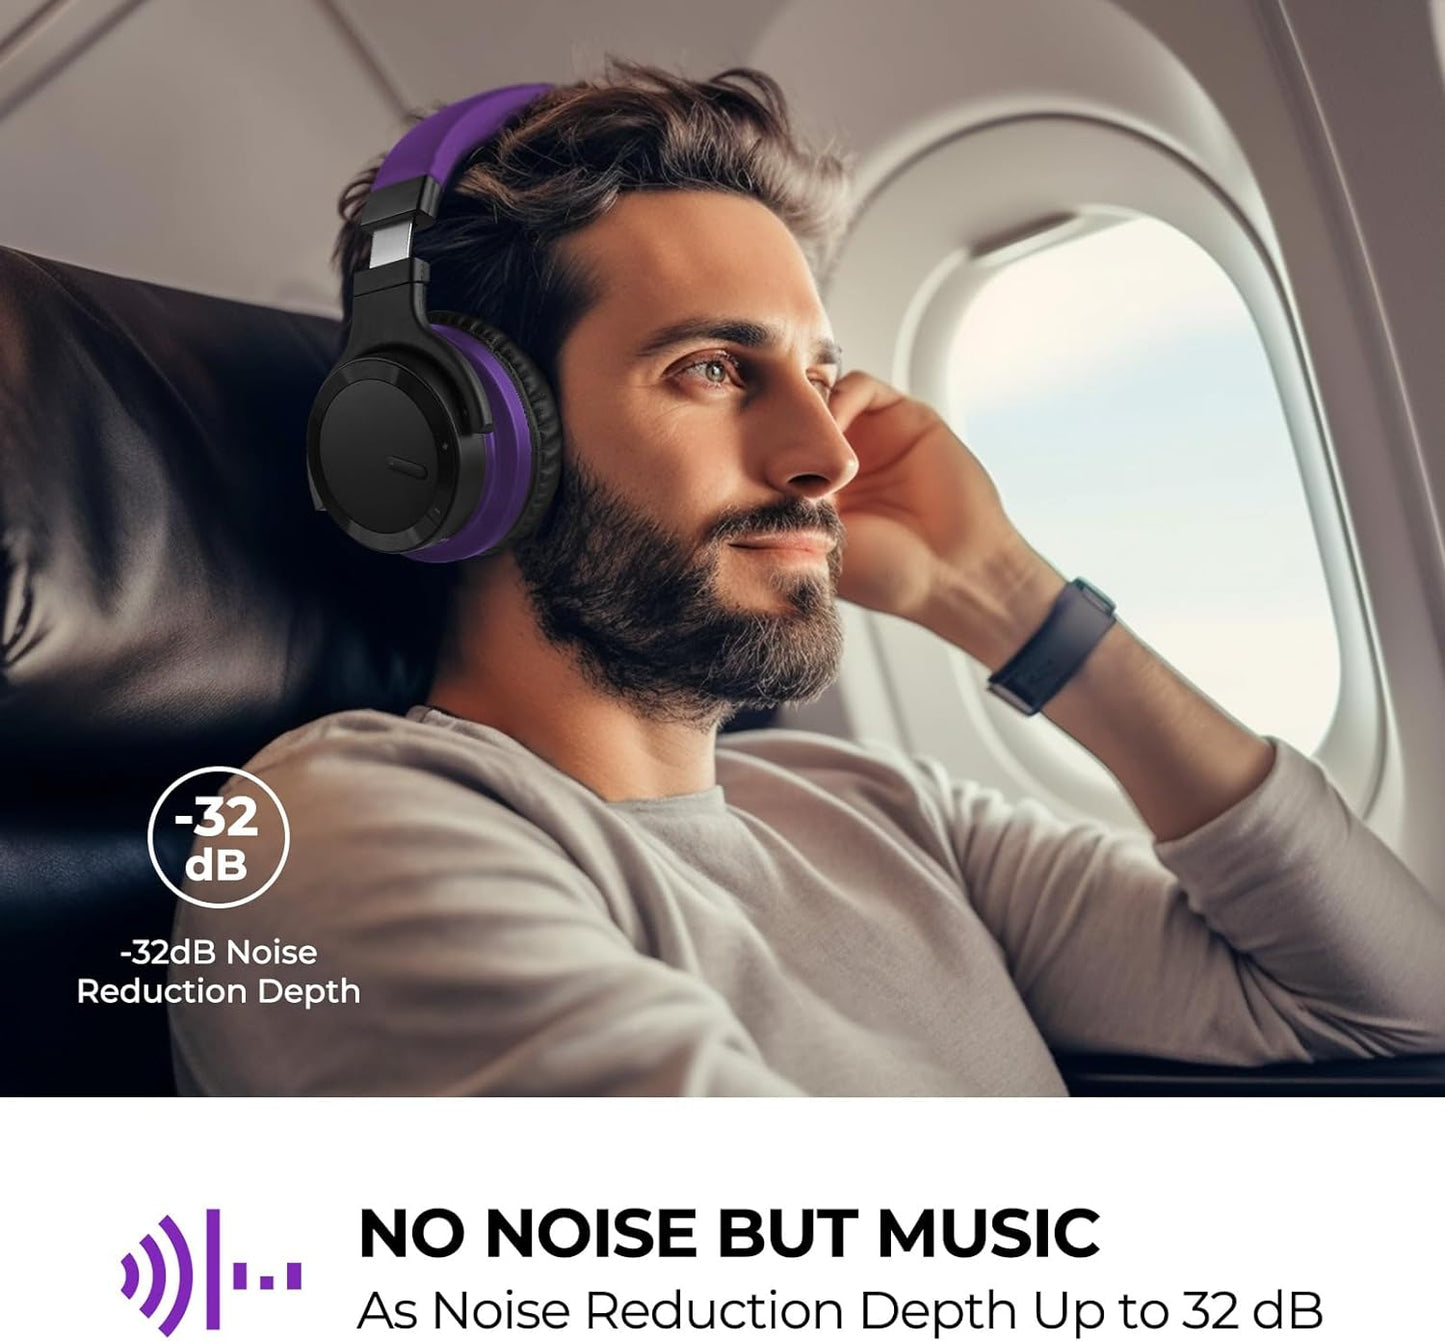 E7 Active Noise Cancelling Headphones Wireless Bluetooth Headphones with Rich Bass, Wireless Headphones with Mic, Clear Calls, Bluetooth 5.0, 30 Hours Playtime, Comfort Fit, Purple